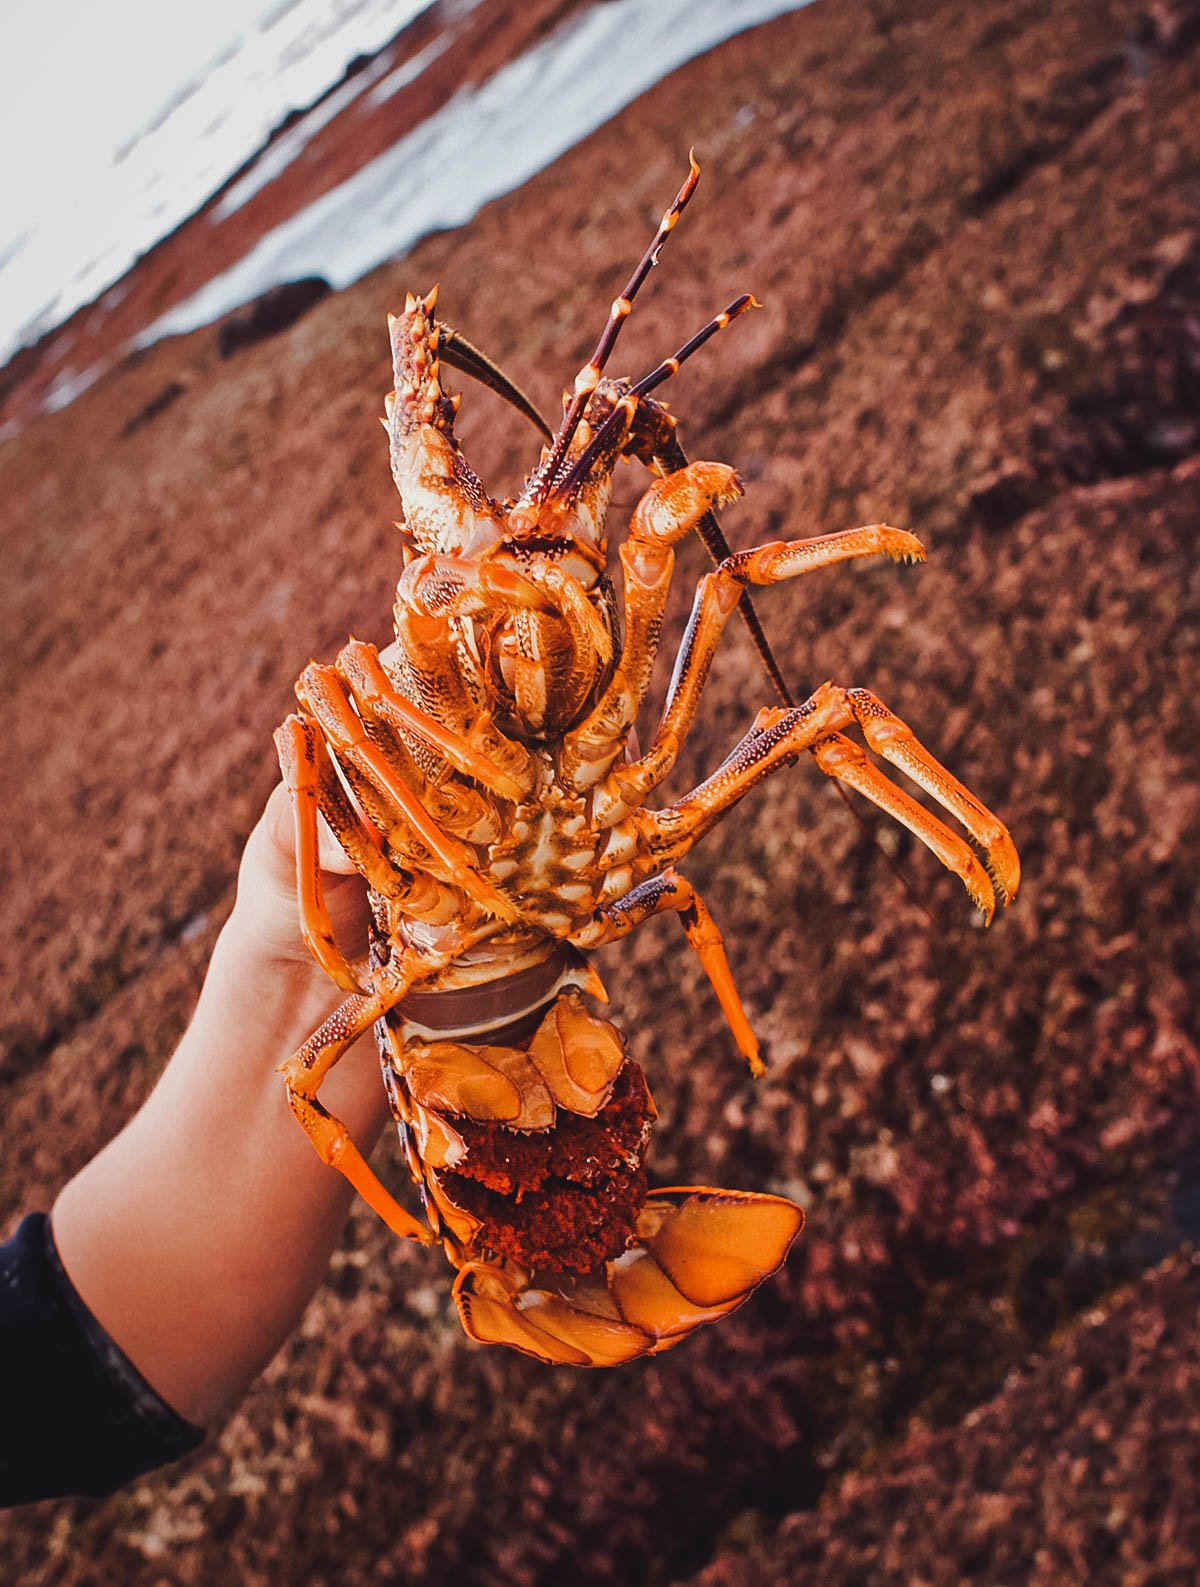 Crayfish in New Zealand